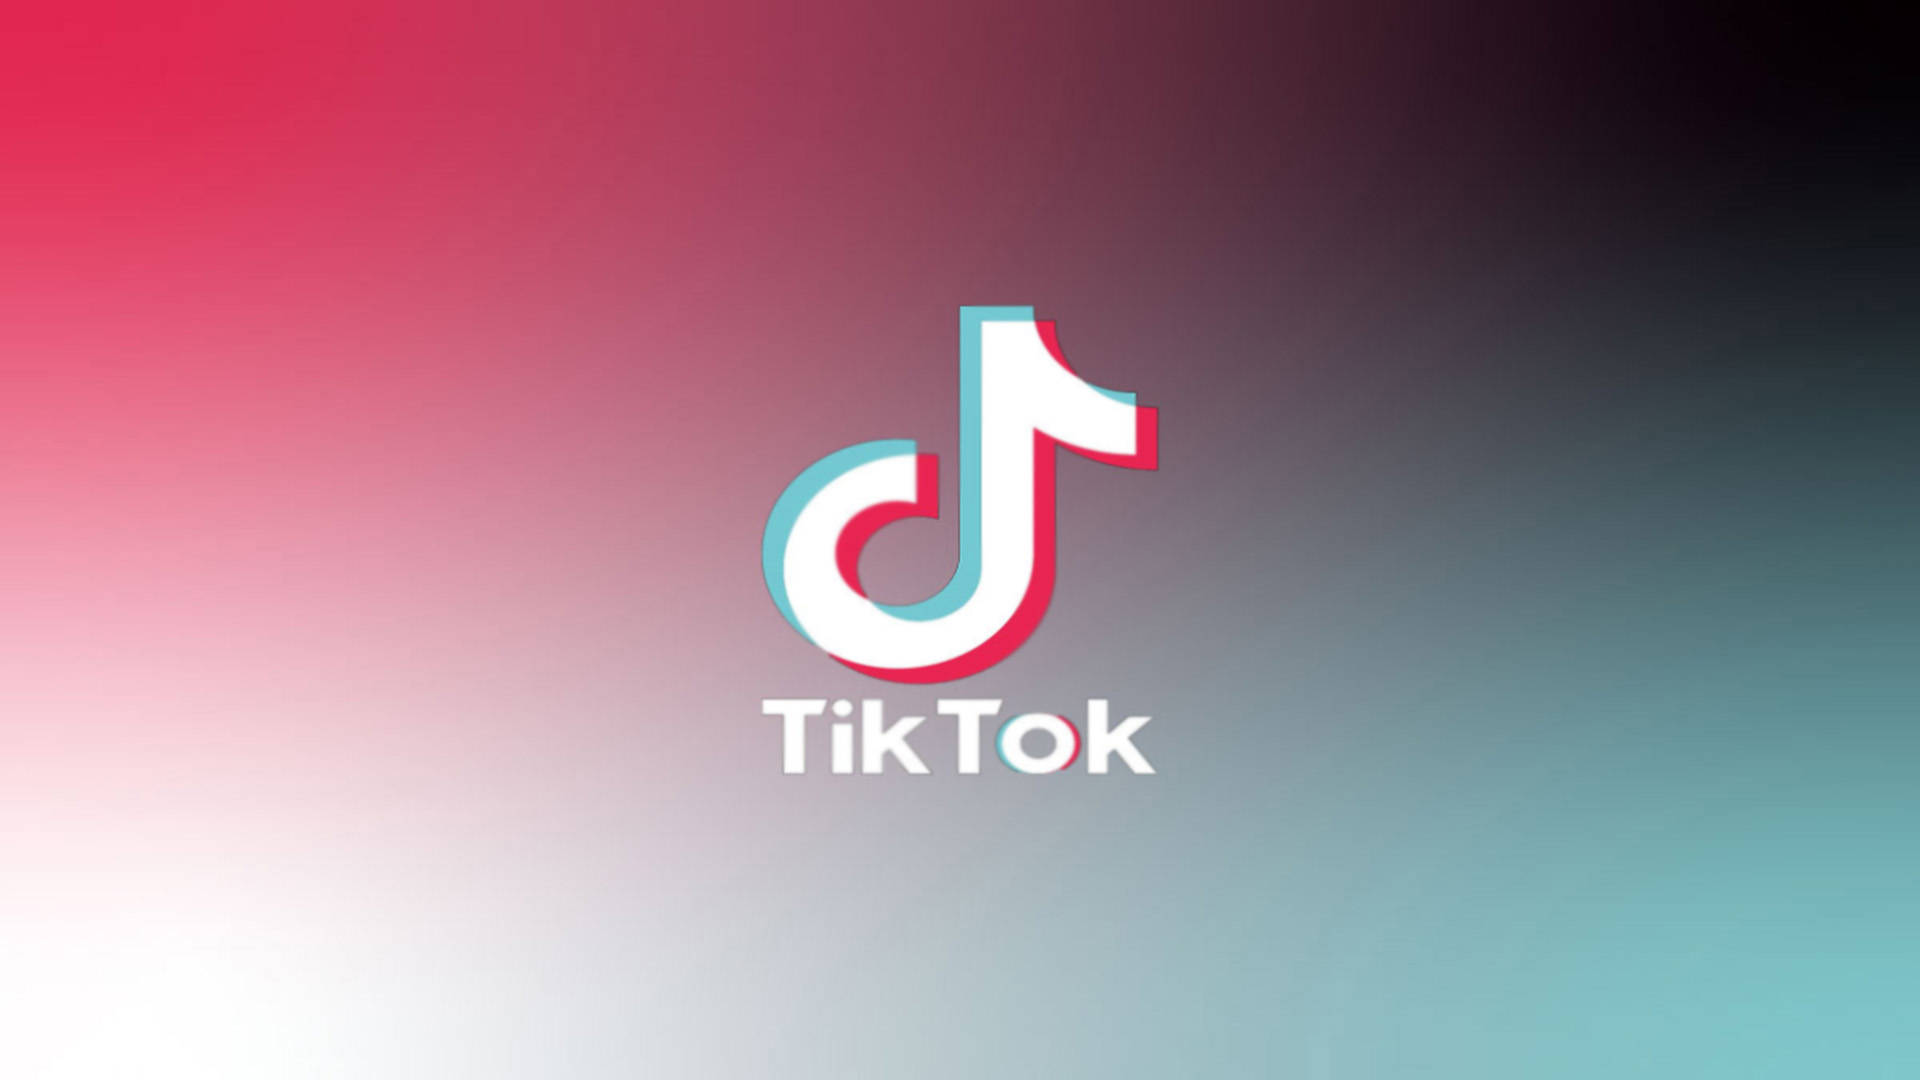 Tiktok Logo Red Teal Gradient Background